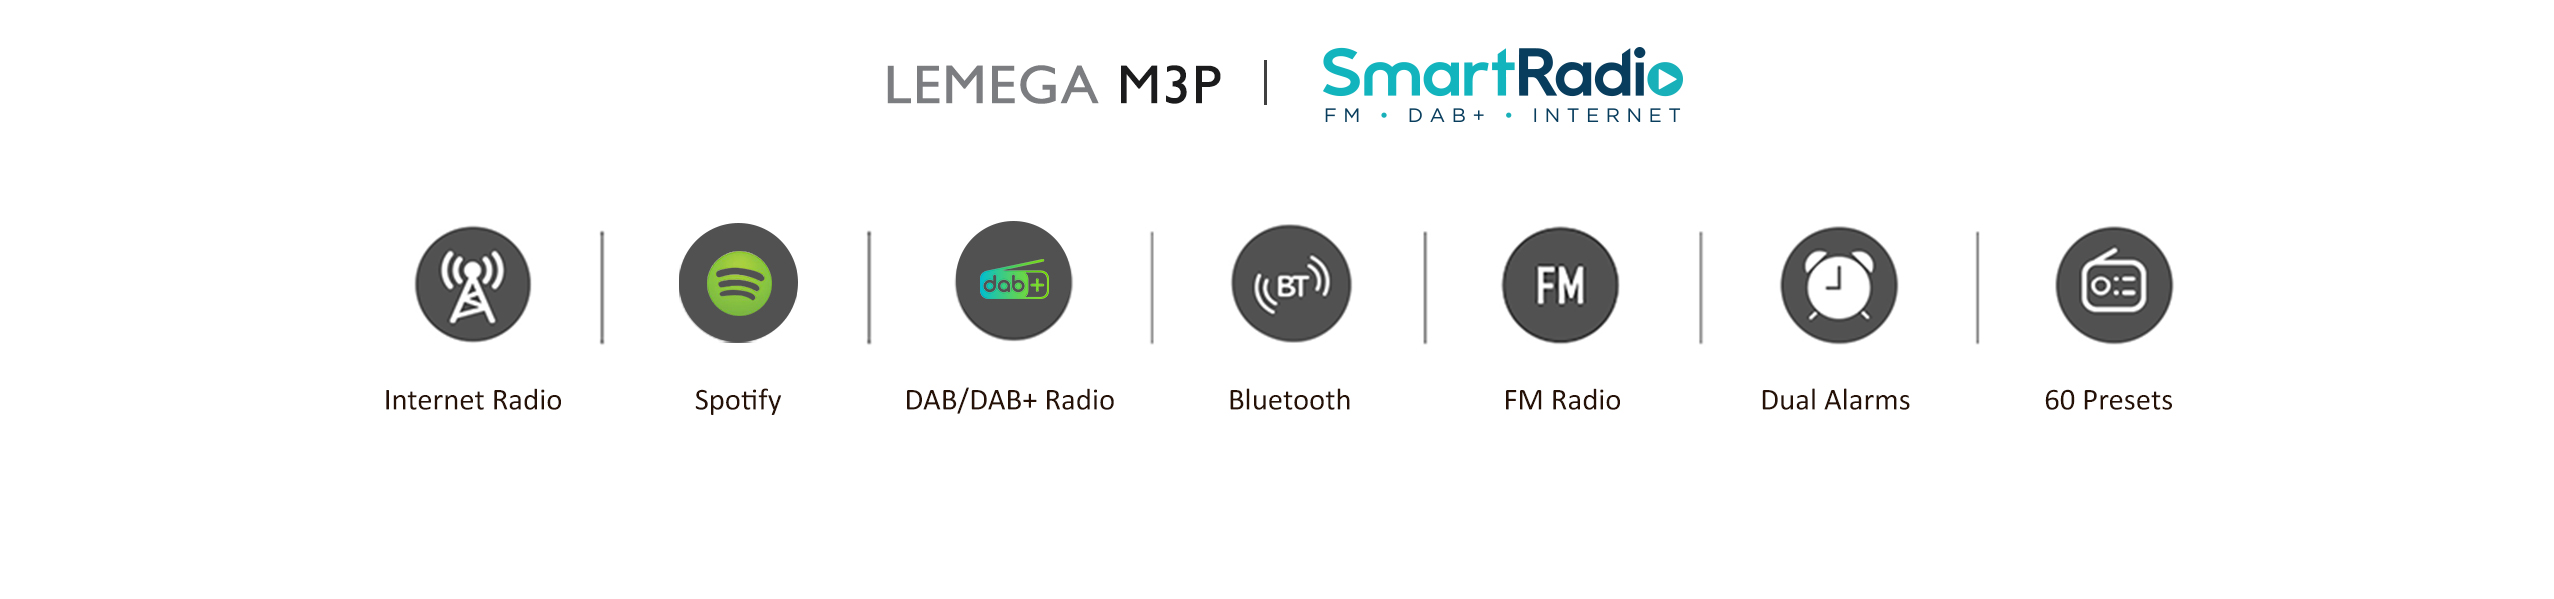 LEMEGA M3P Radio Internet Estéreo WiFi,Radio Digital Dab/Dab+ y FM